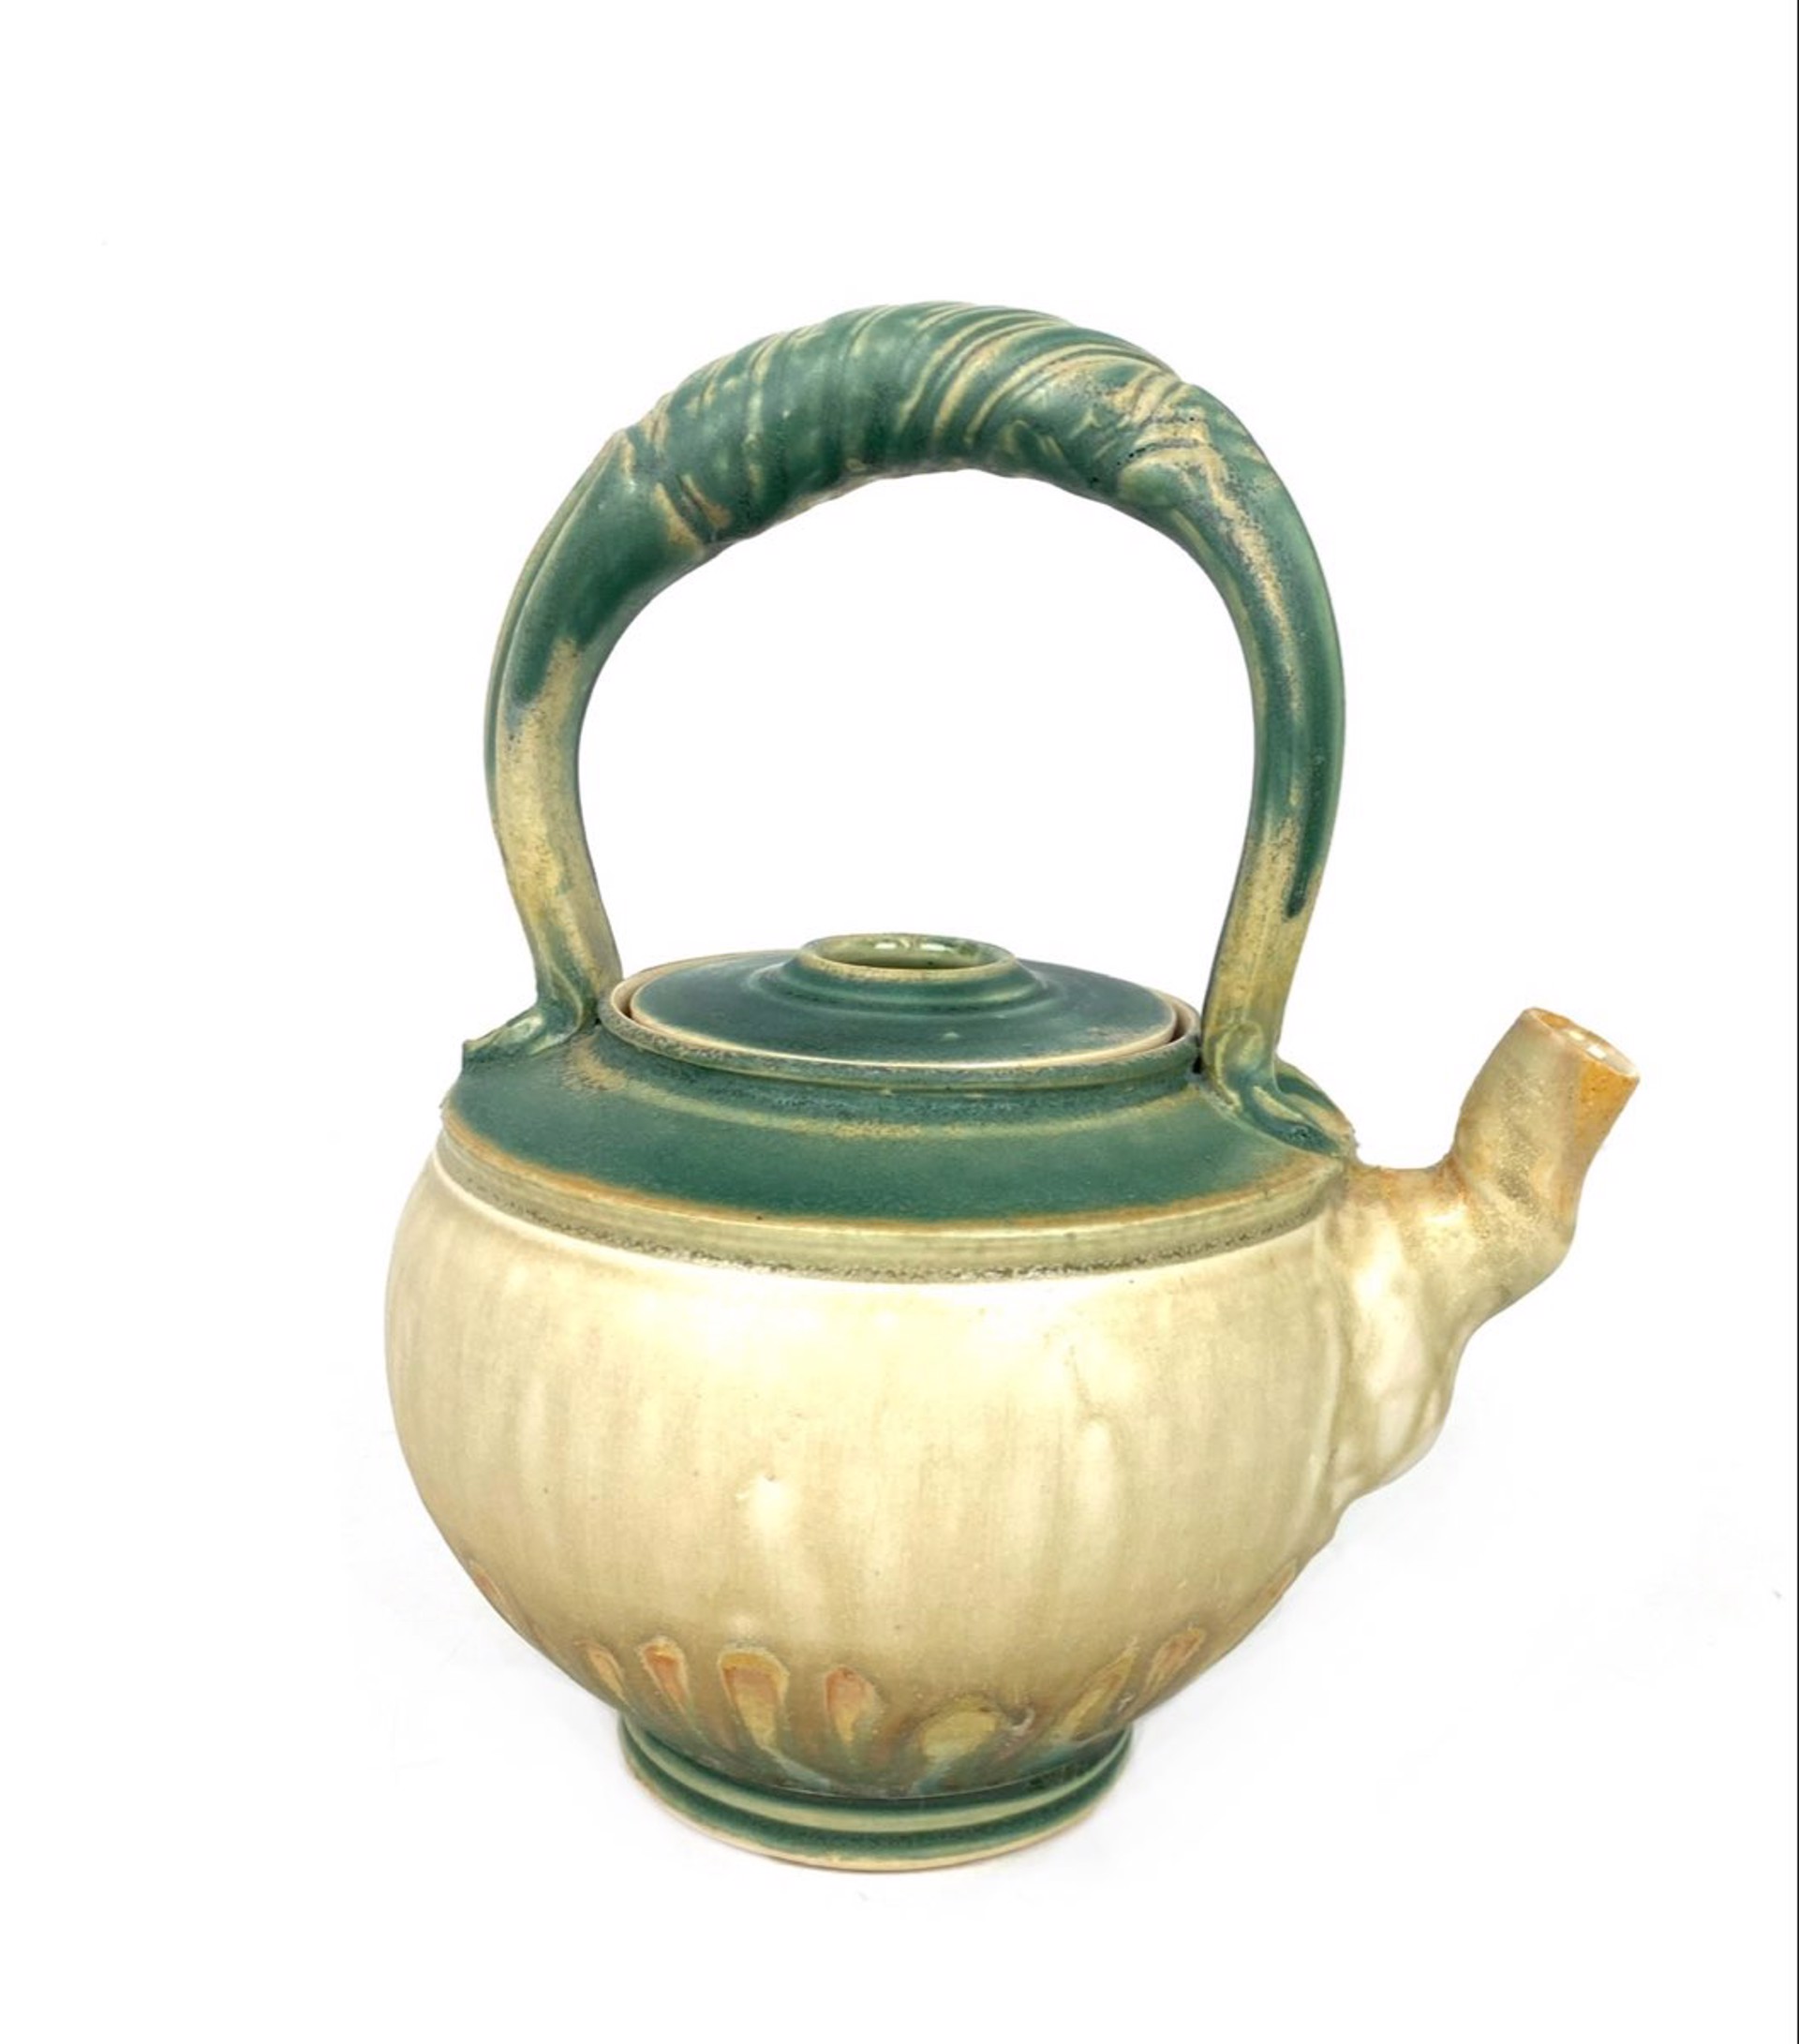 Tea Pot with Strainer by Richard Aerni